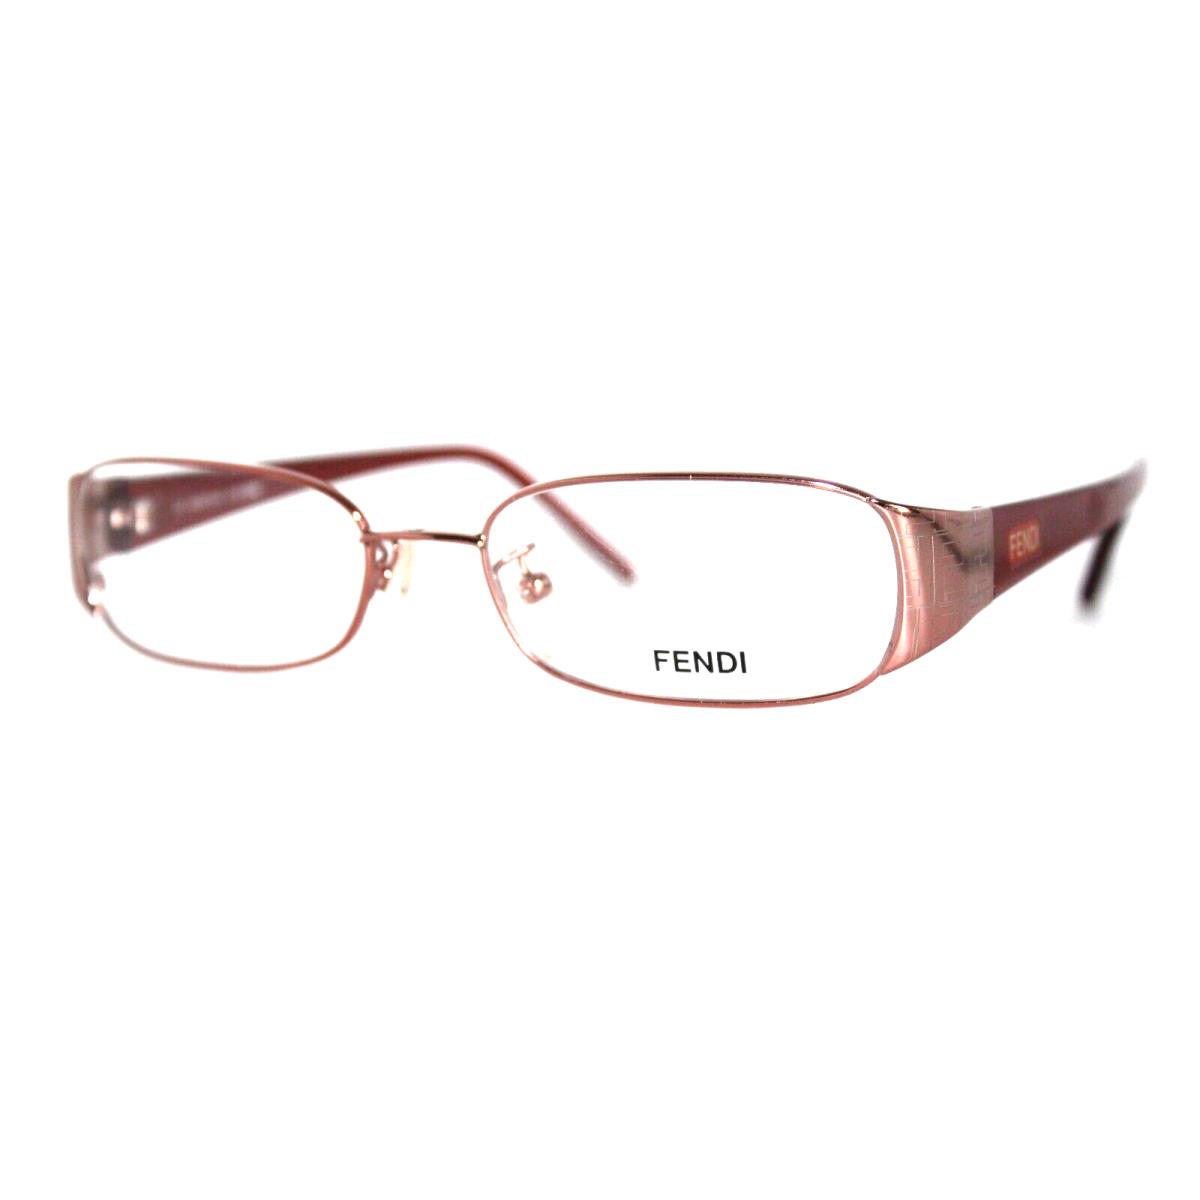 Fendi F653 749 Bronze Orange Eyeglasses Frames 50-16-135MM W/case